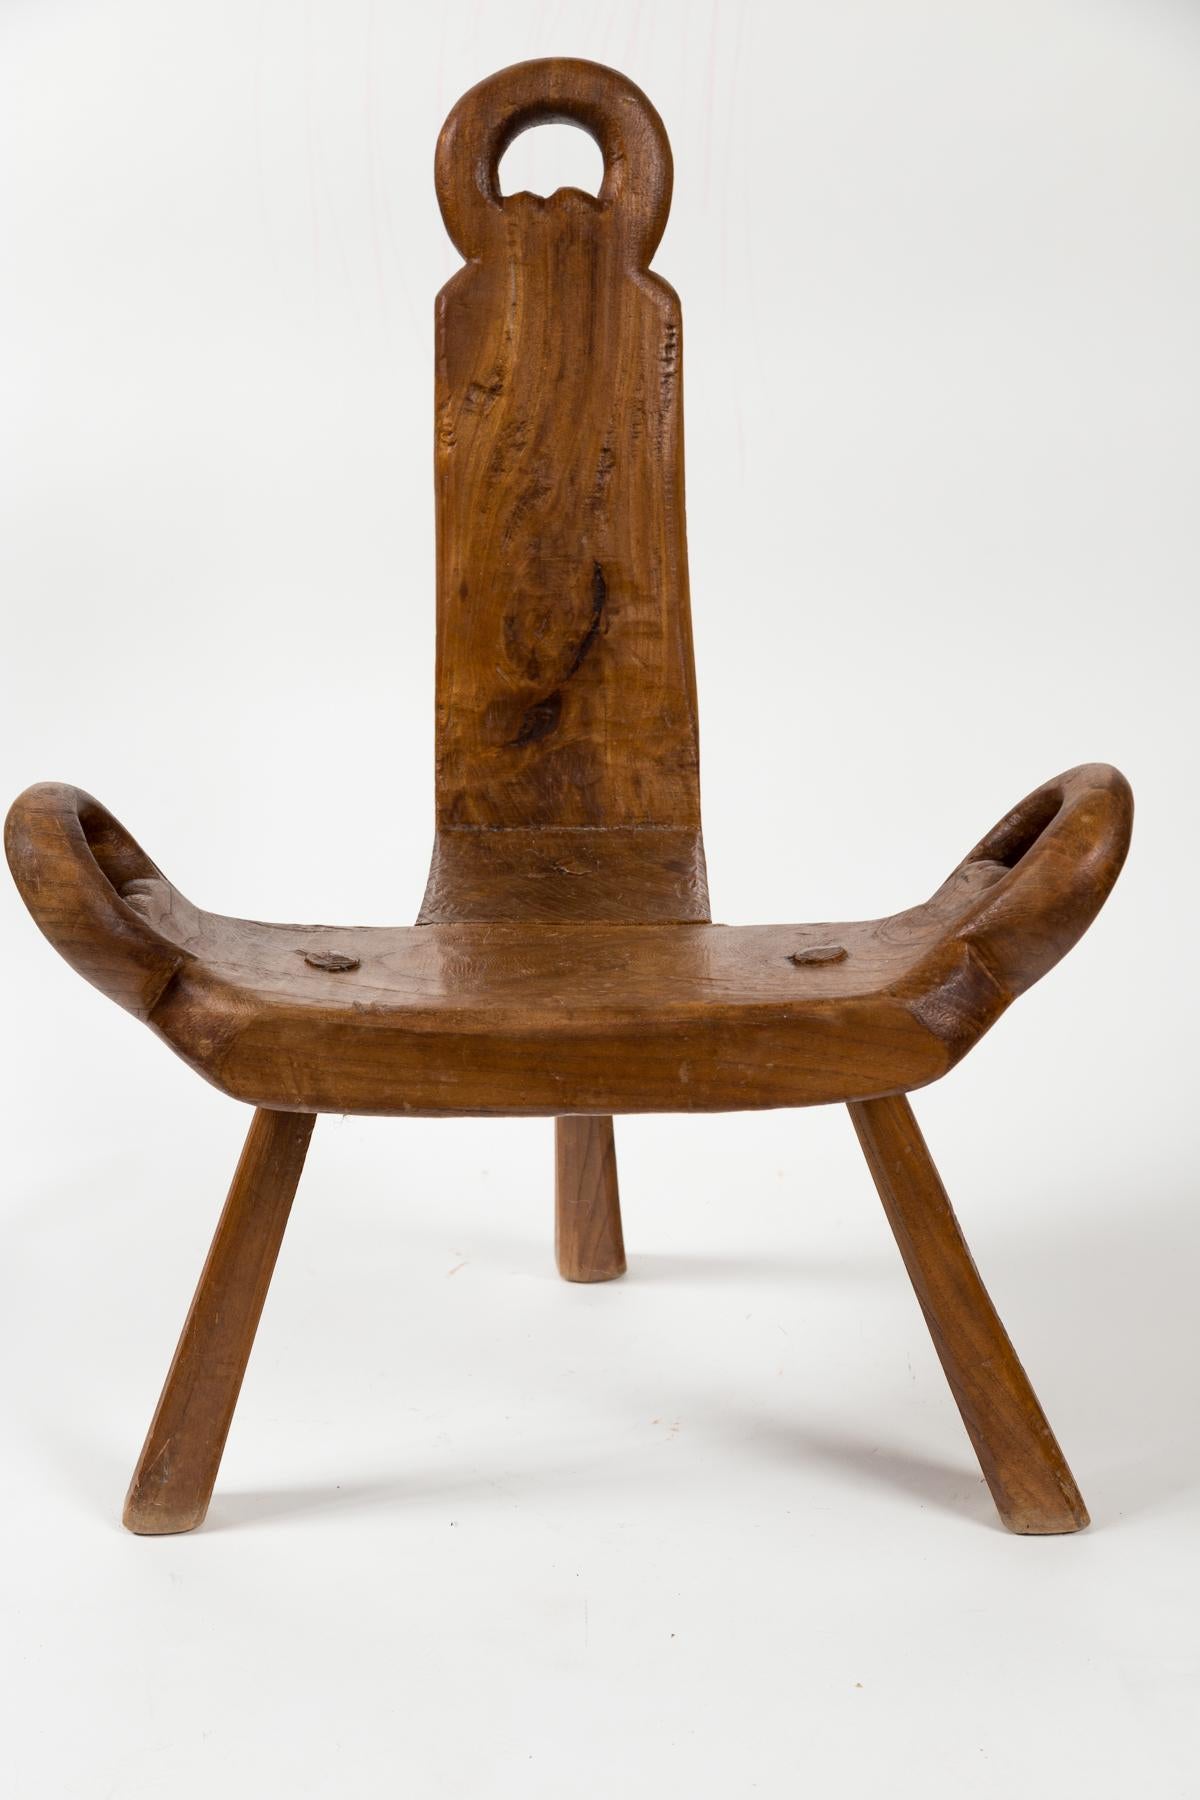 Italian Wood Sgabello Stool, mid-20th century. Doweled construction. A modern interpretation of a European Renaissance chair form.